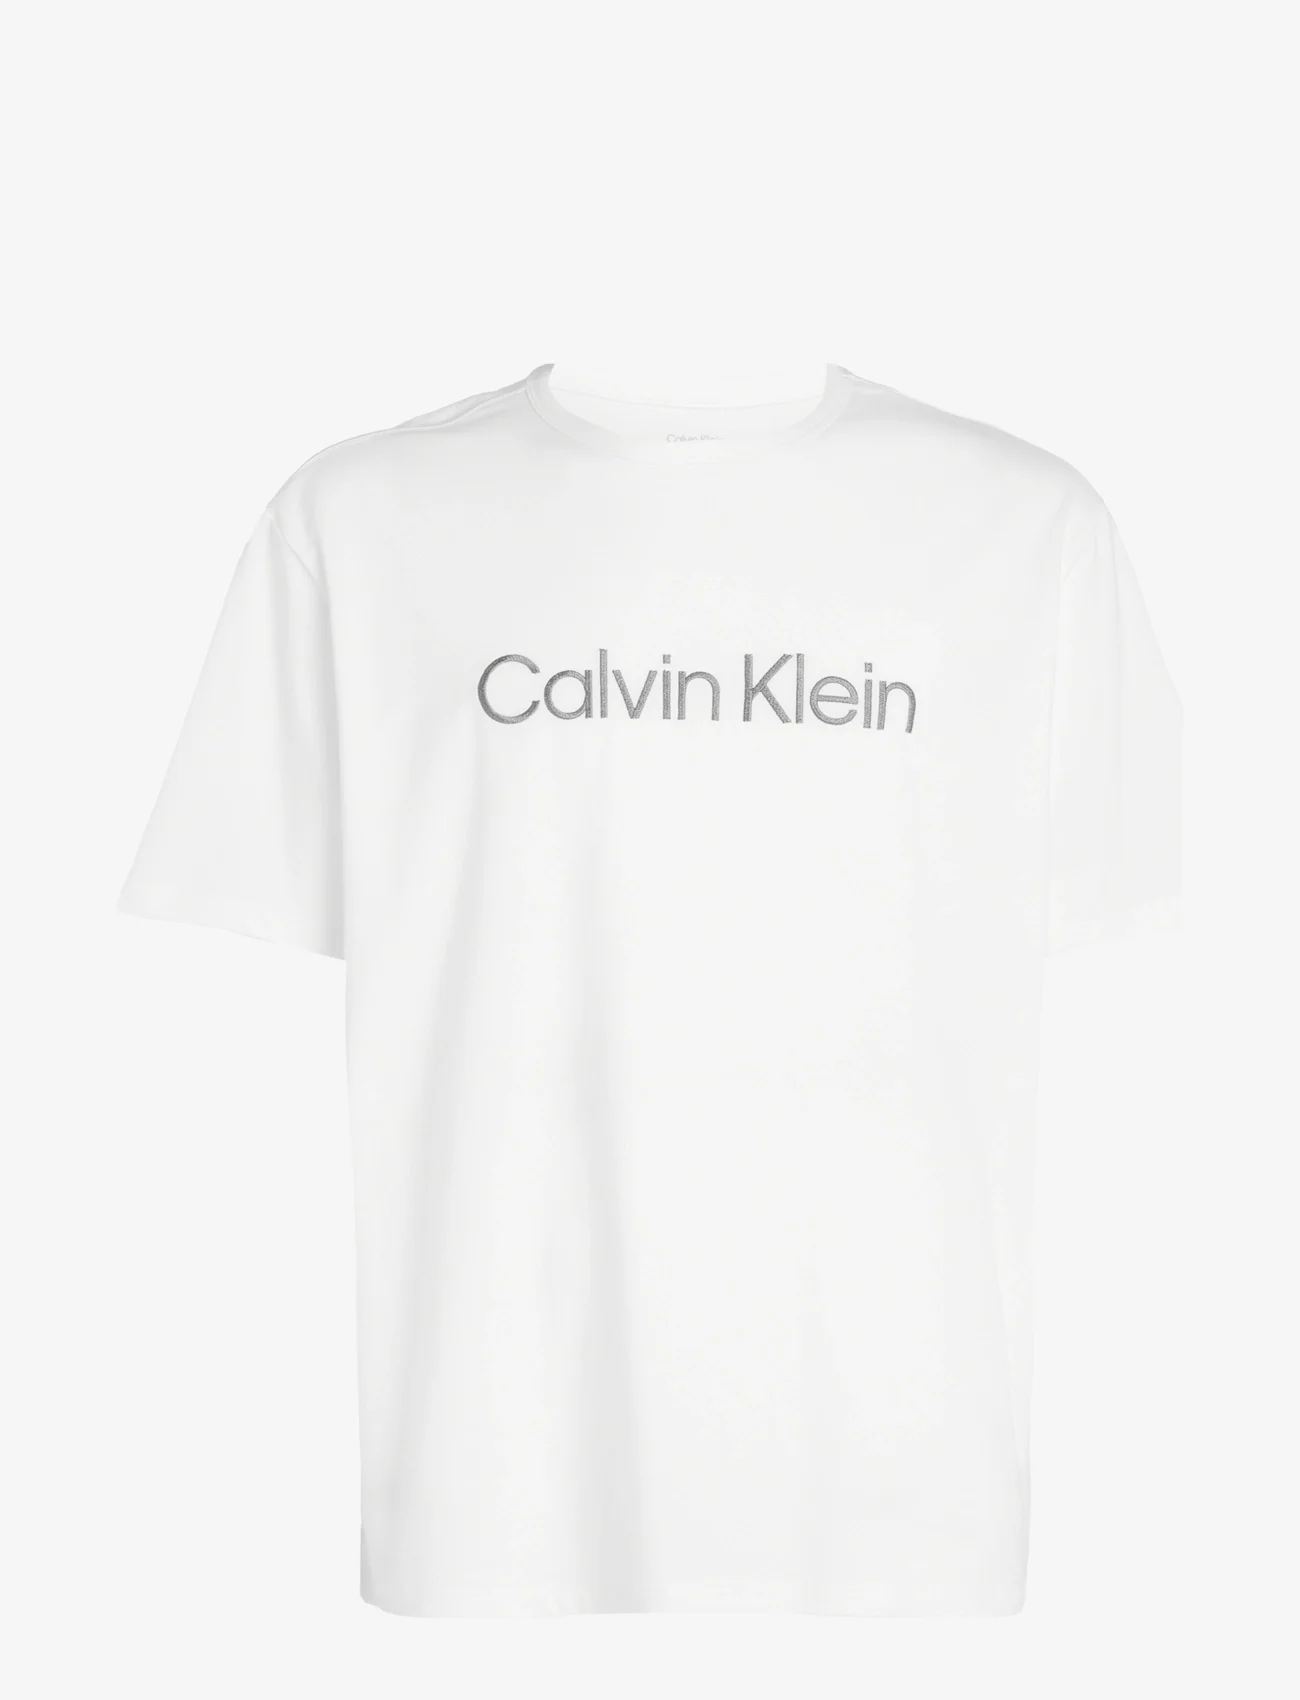 Calvin Klein - S/S CREW NECK - kurzärmelige - white (eiffel tower logo) - 0